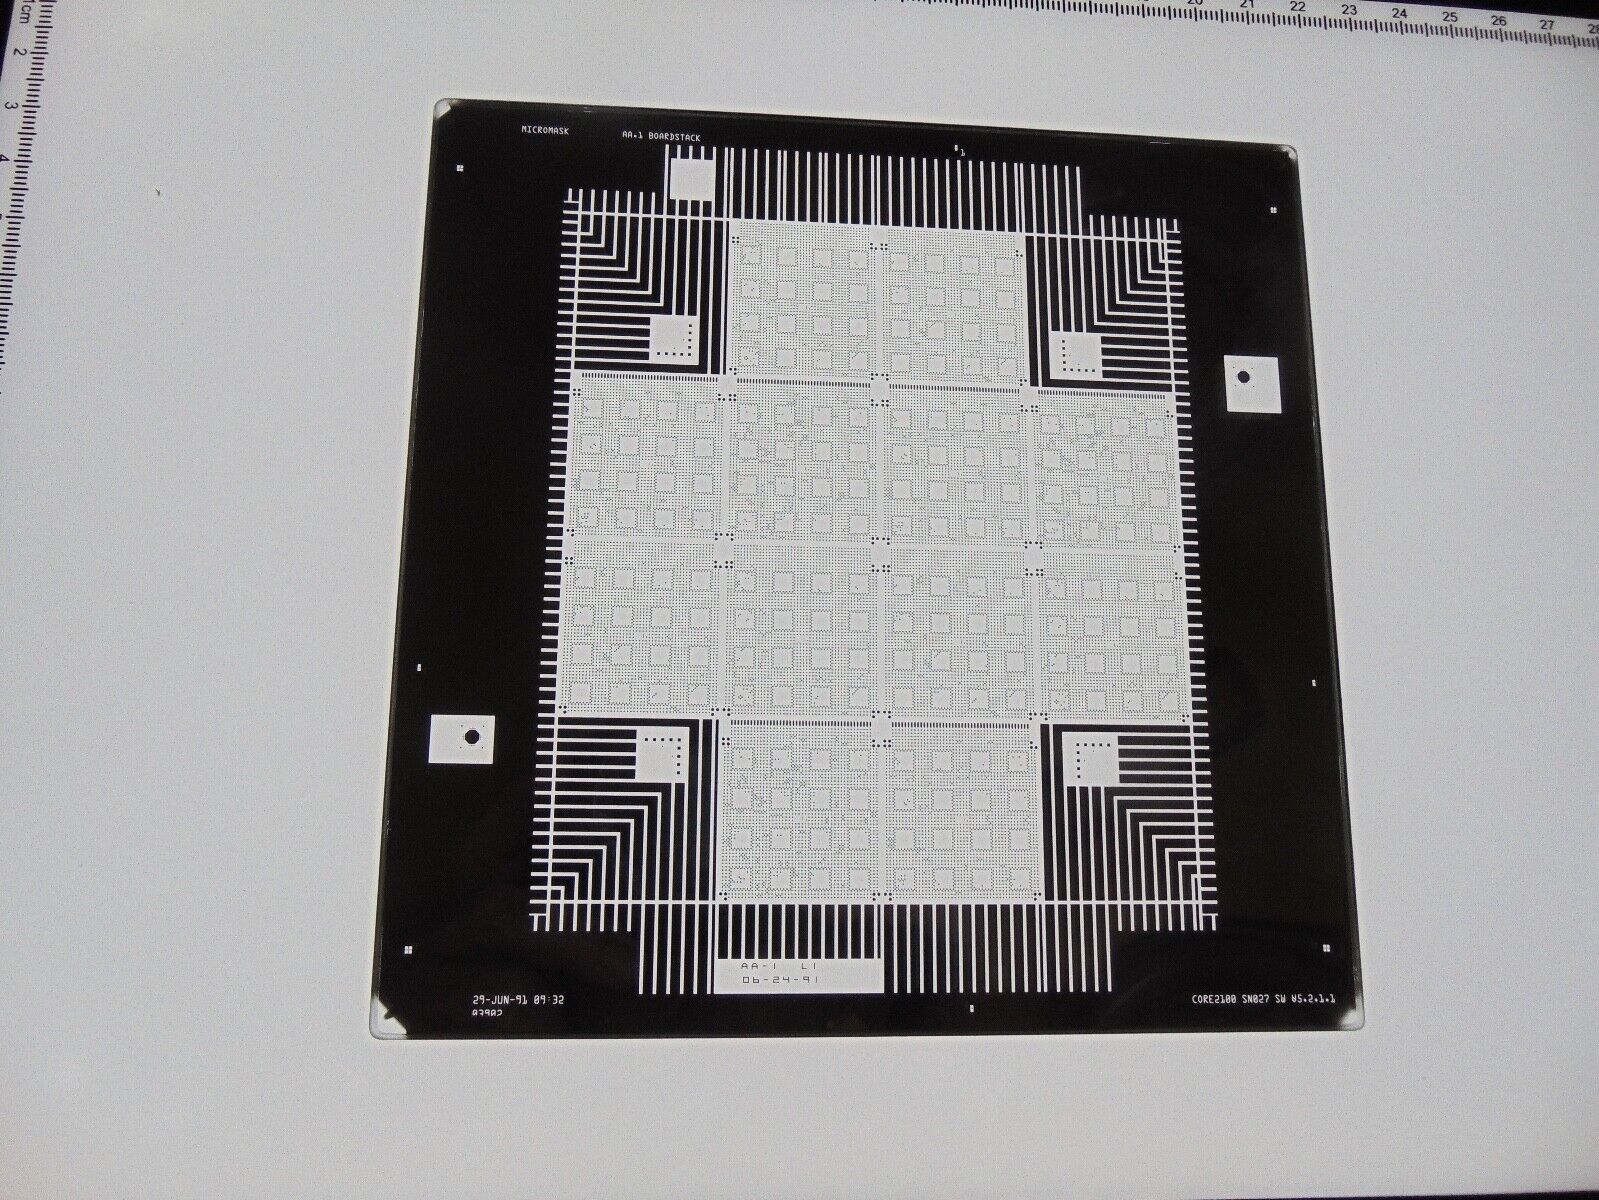 Cray 3 Supercomputer PCB Photomask for Board AA-1 Layer 1